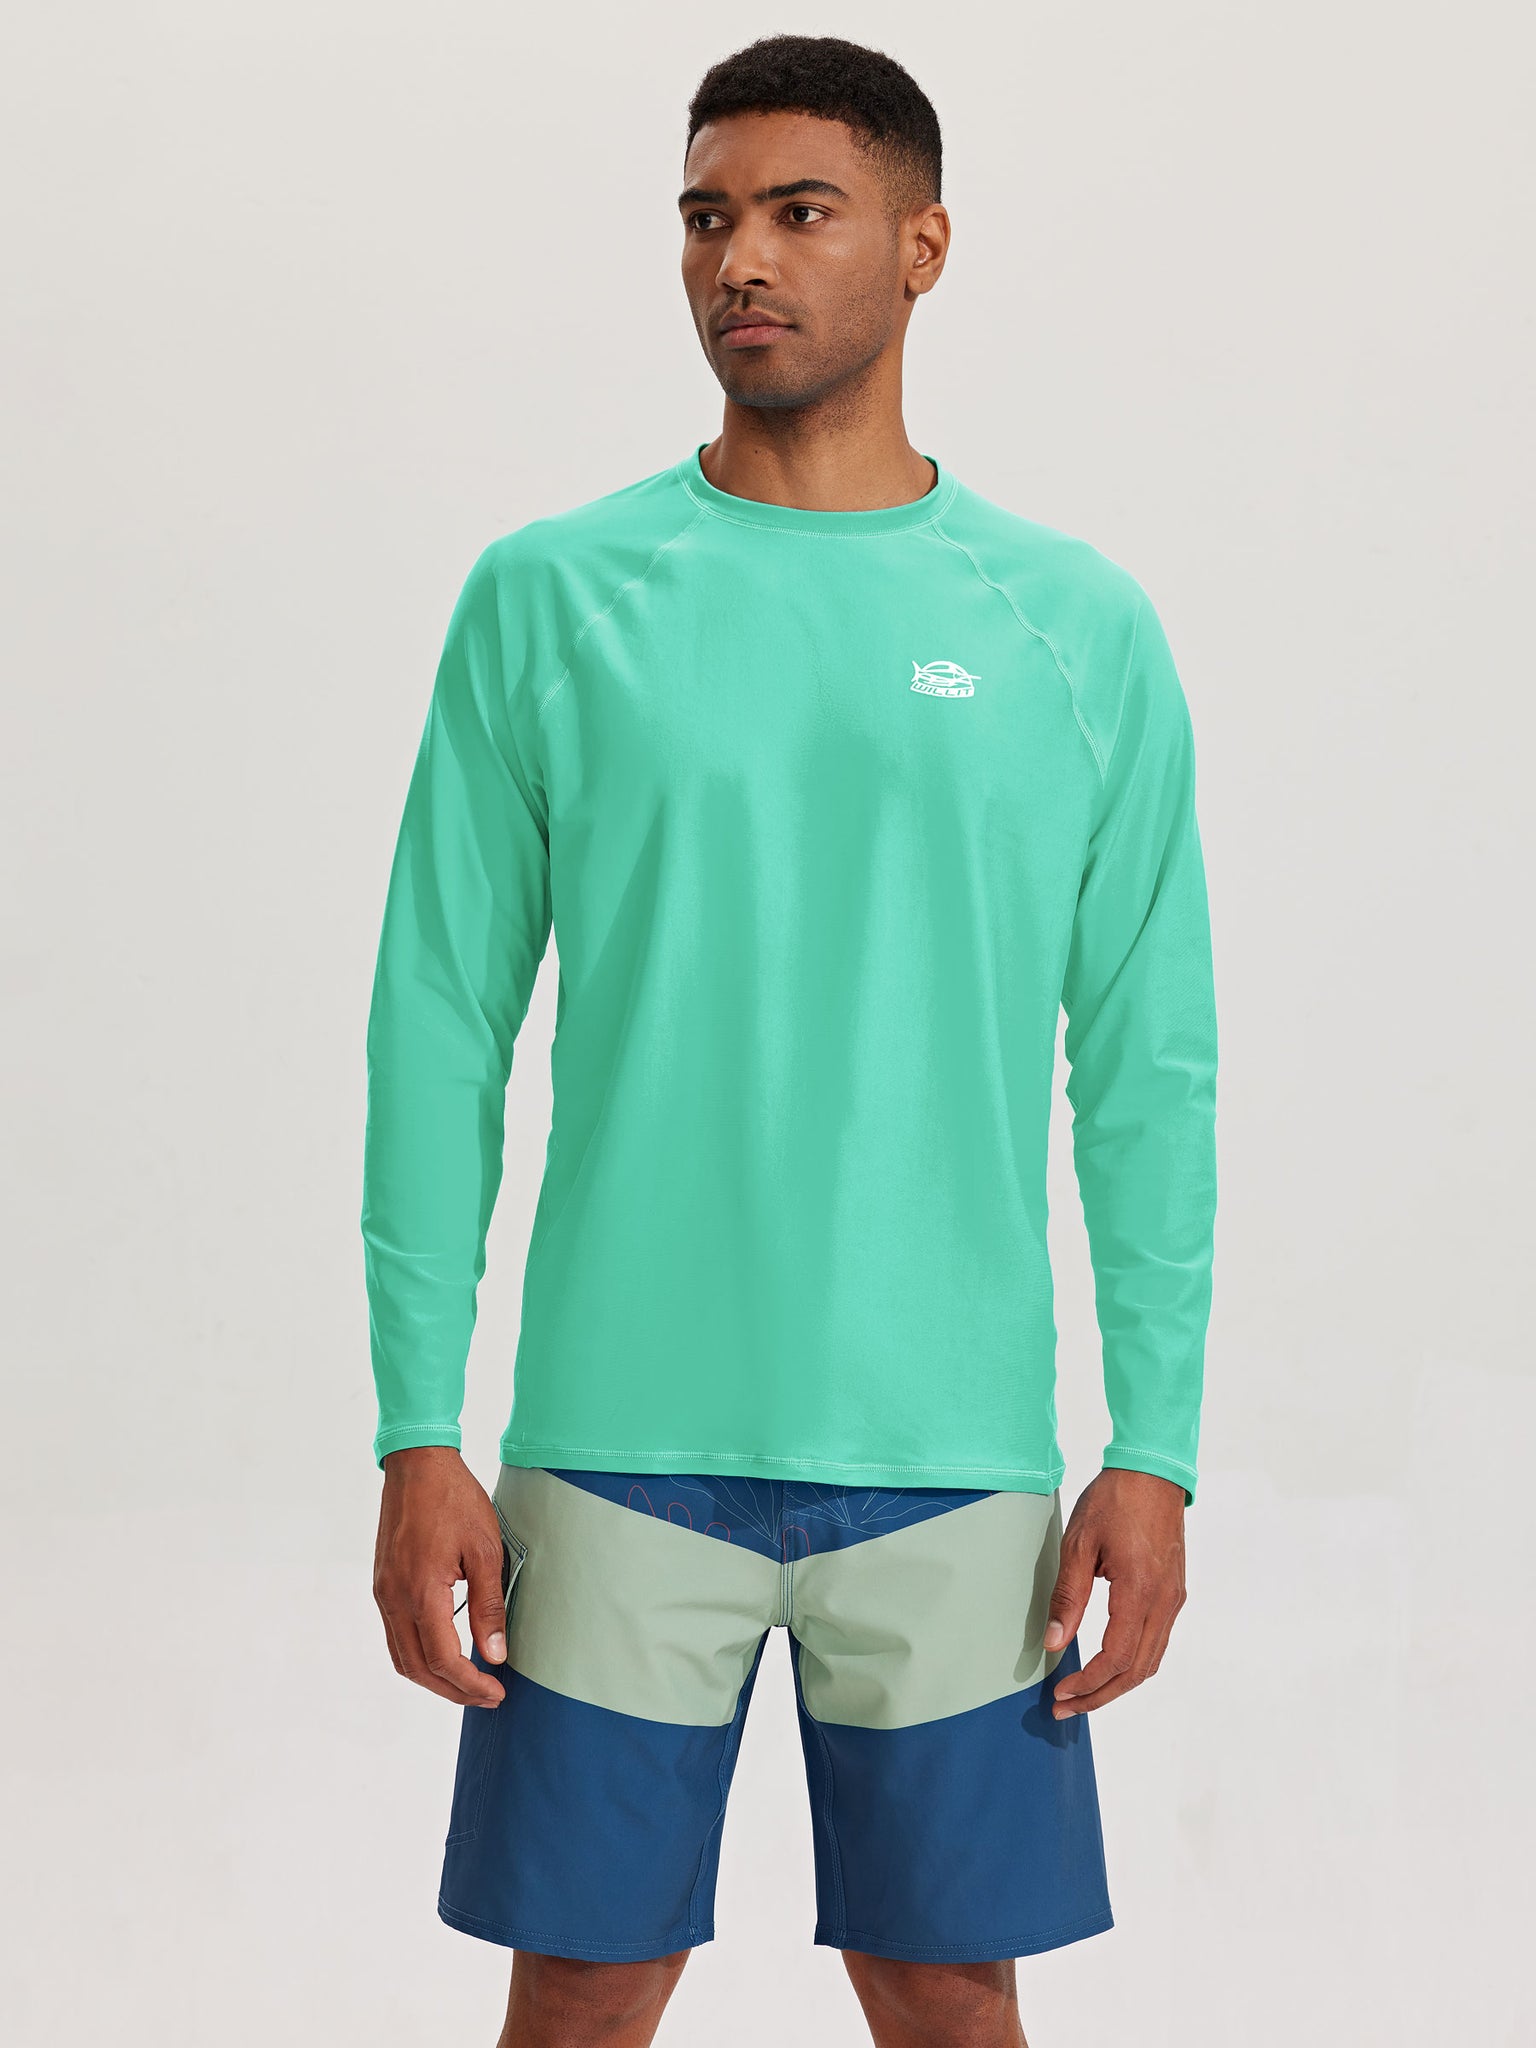 Men's Sun Protection Long Sleeve Shirt_LightGreen_model2